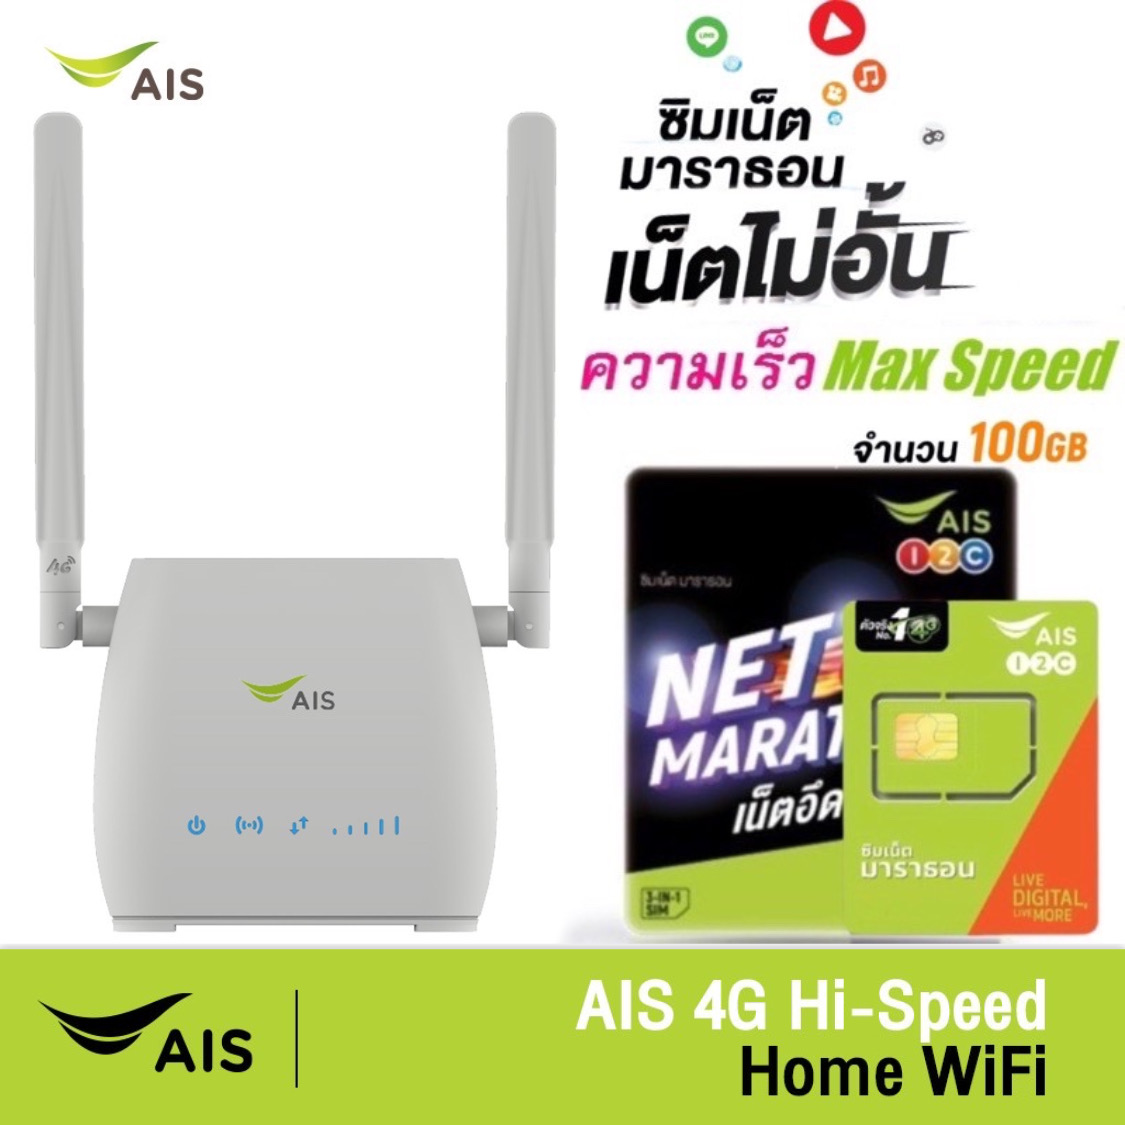 AIS 4G HOME WiFi ใช้ได้ทุกเครือข่าย